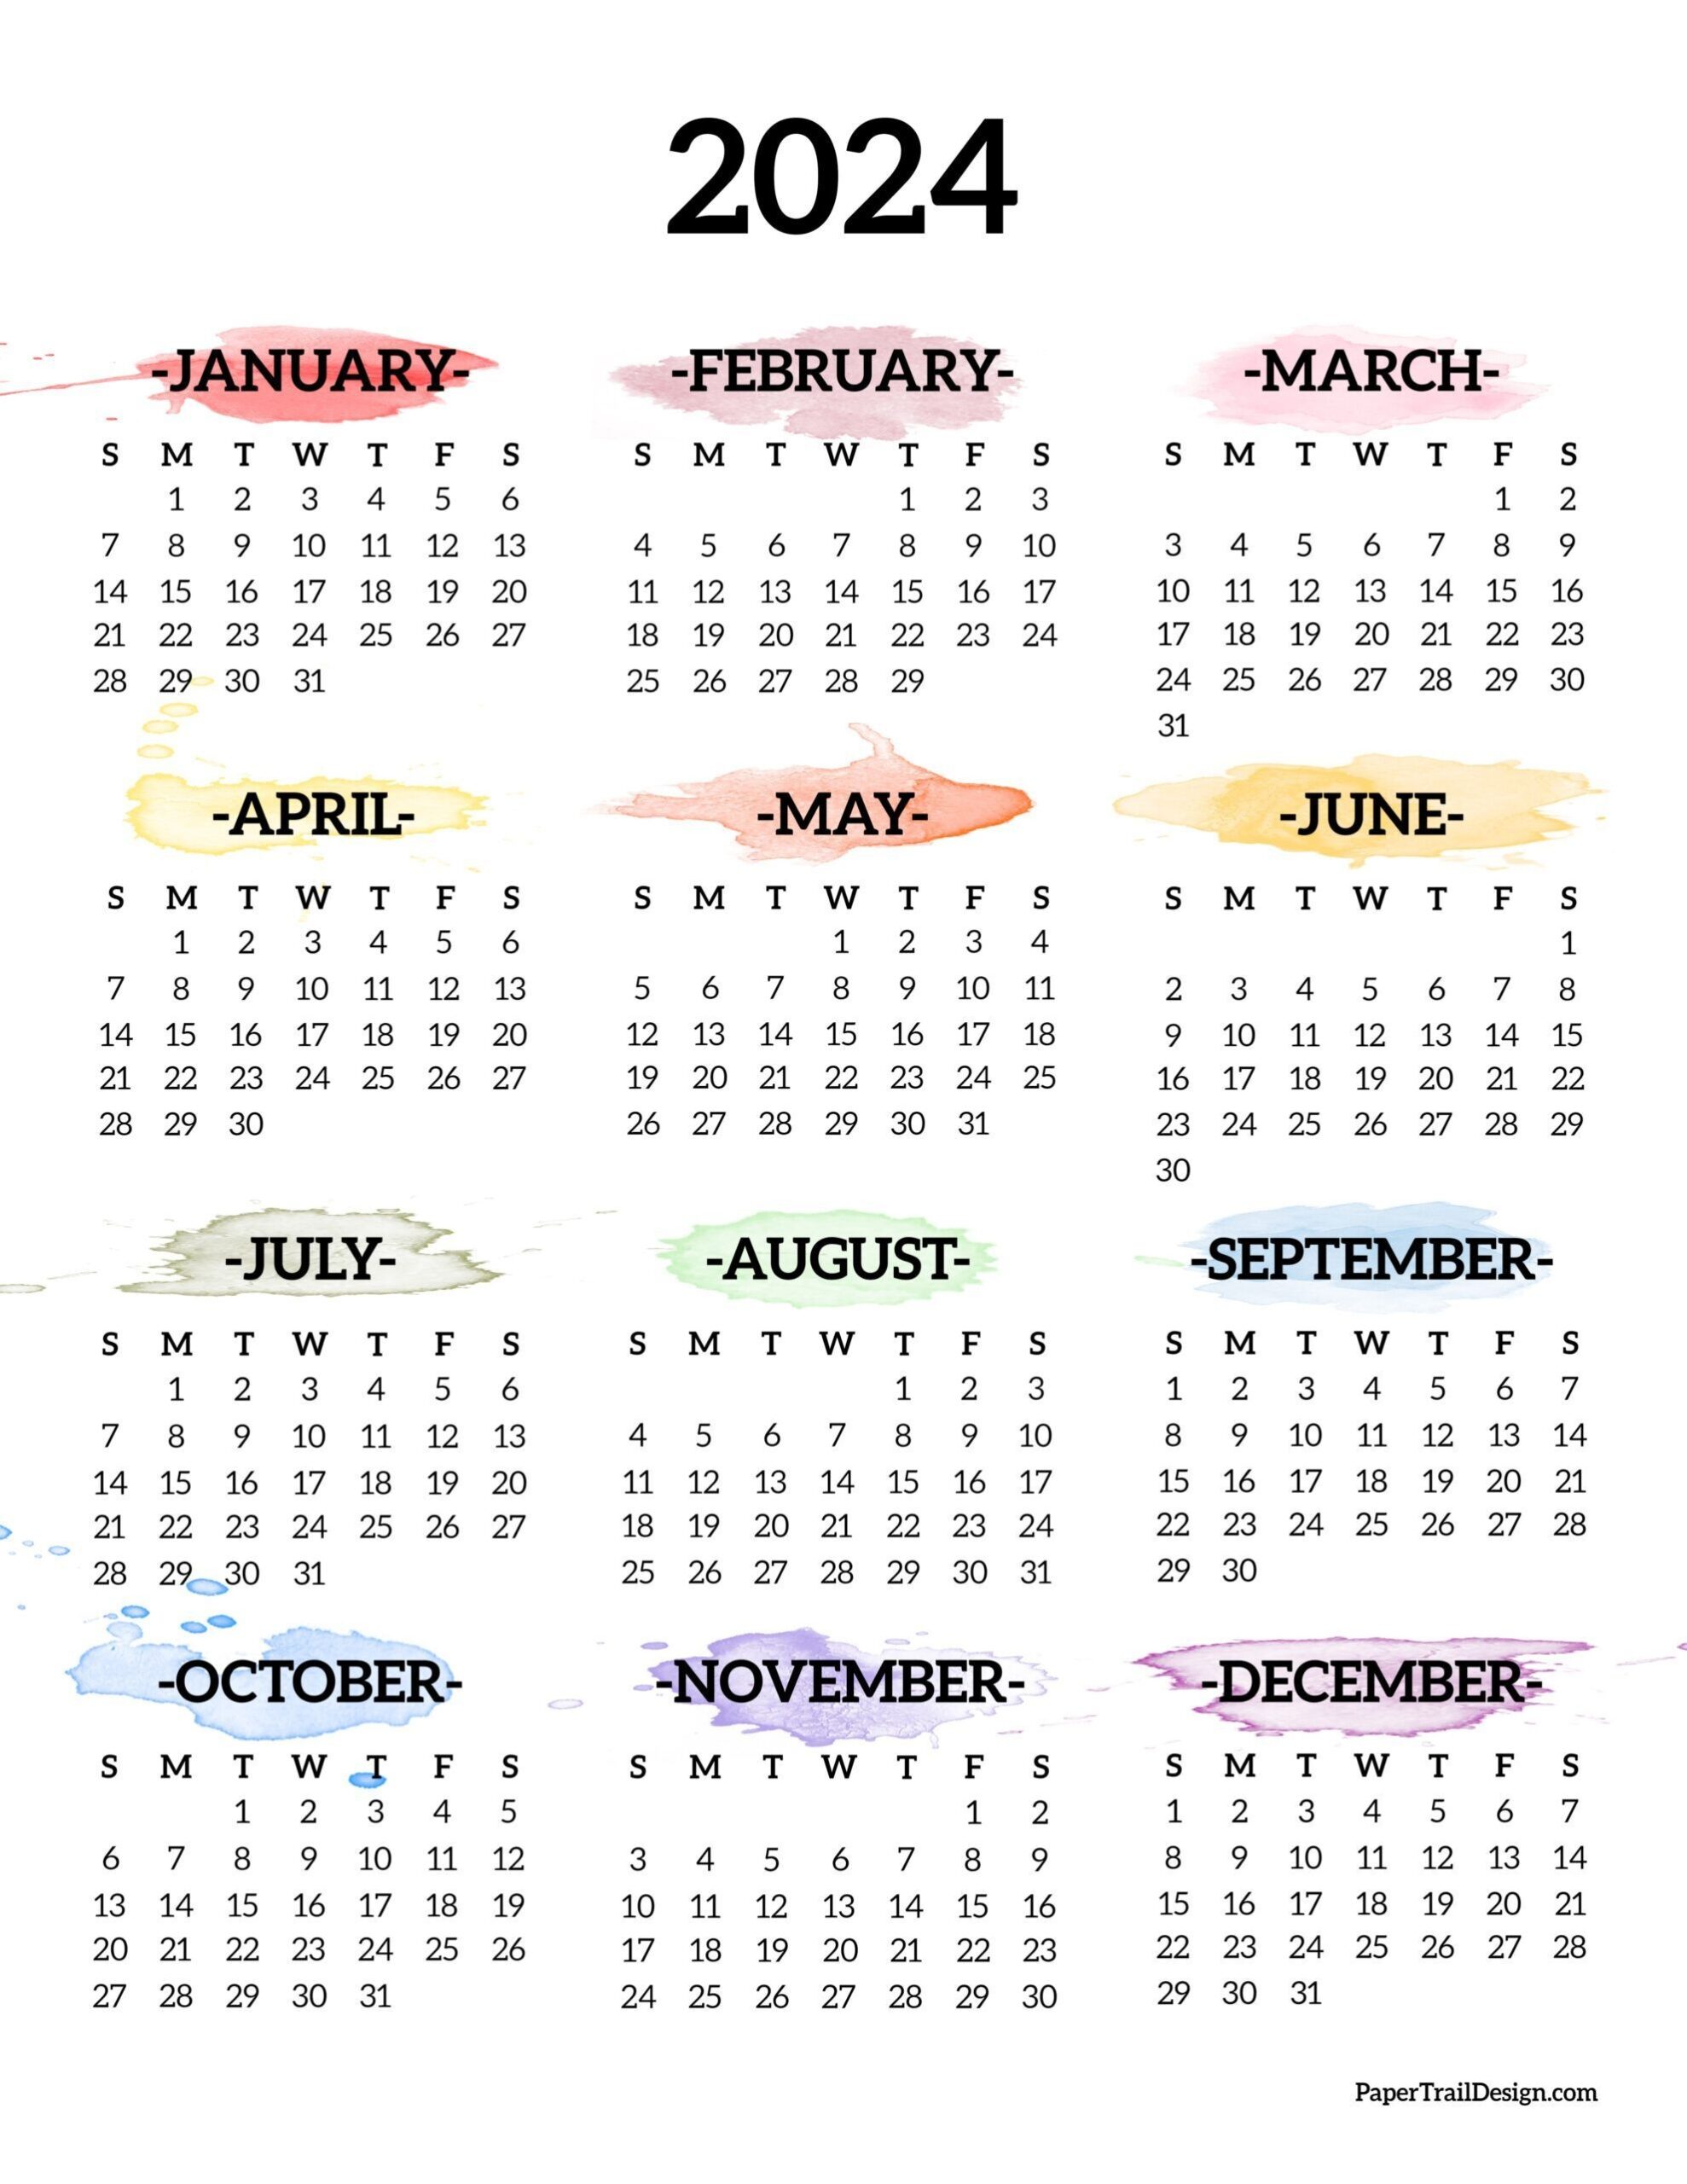 Print This Fun 2024 One Page Calendar In A Fun Rainbow Watercolor | Free Printable 2024 Calendar Fun